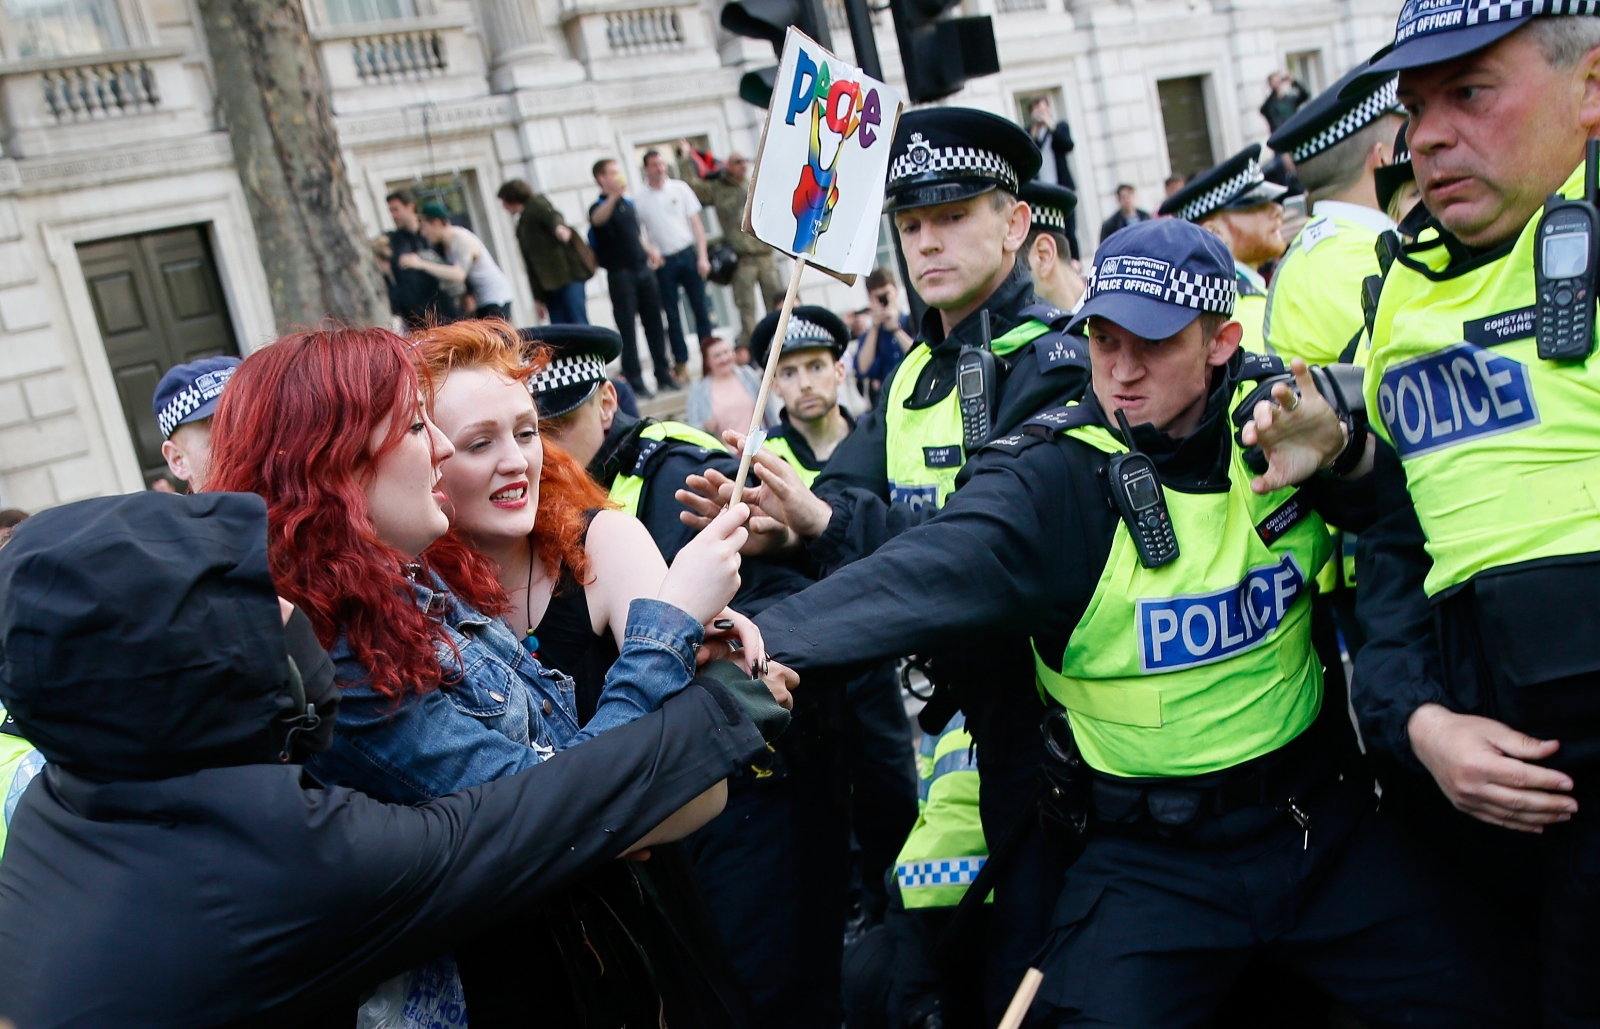 Battles between protestors and police.